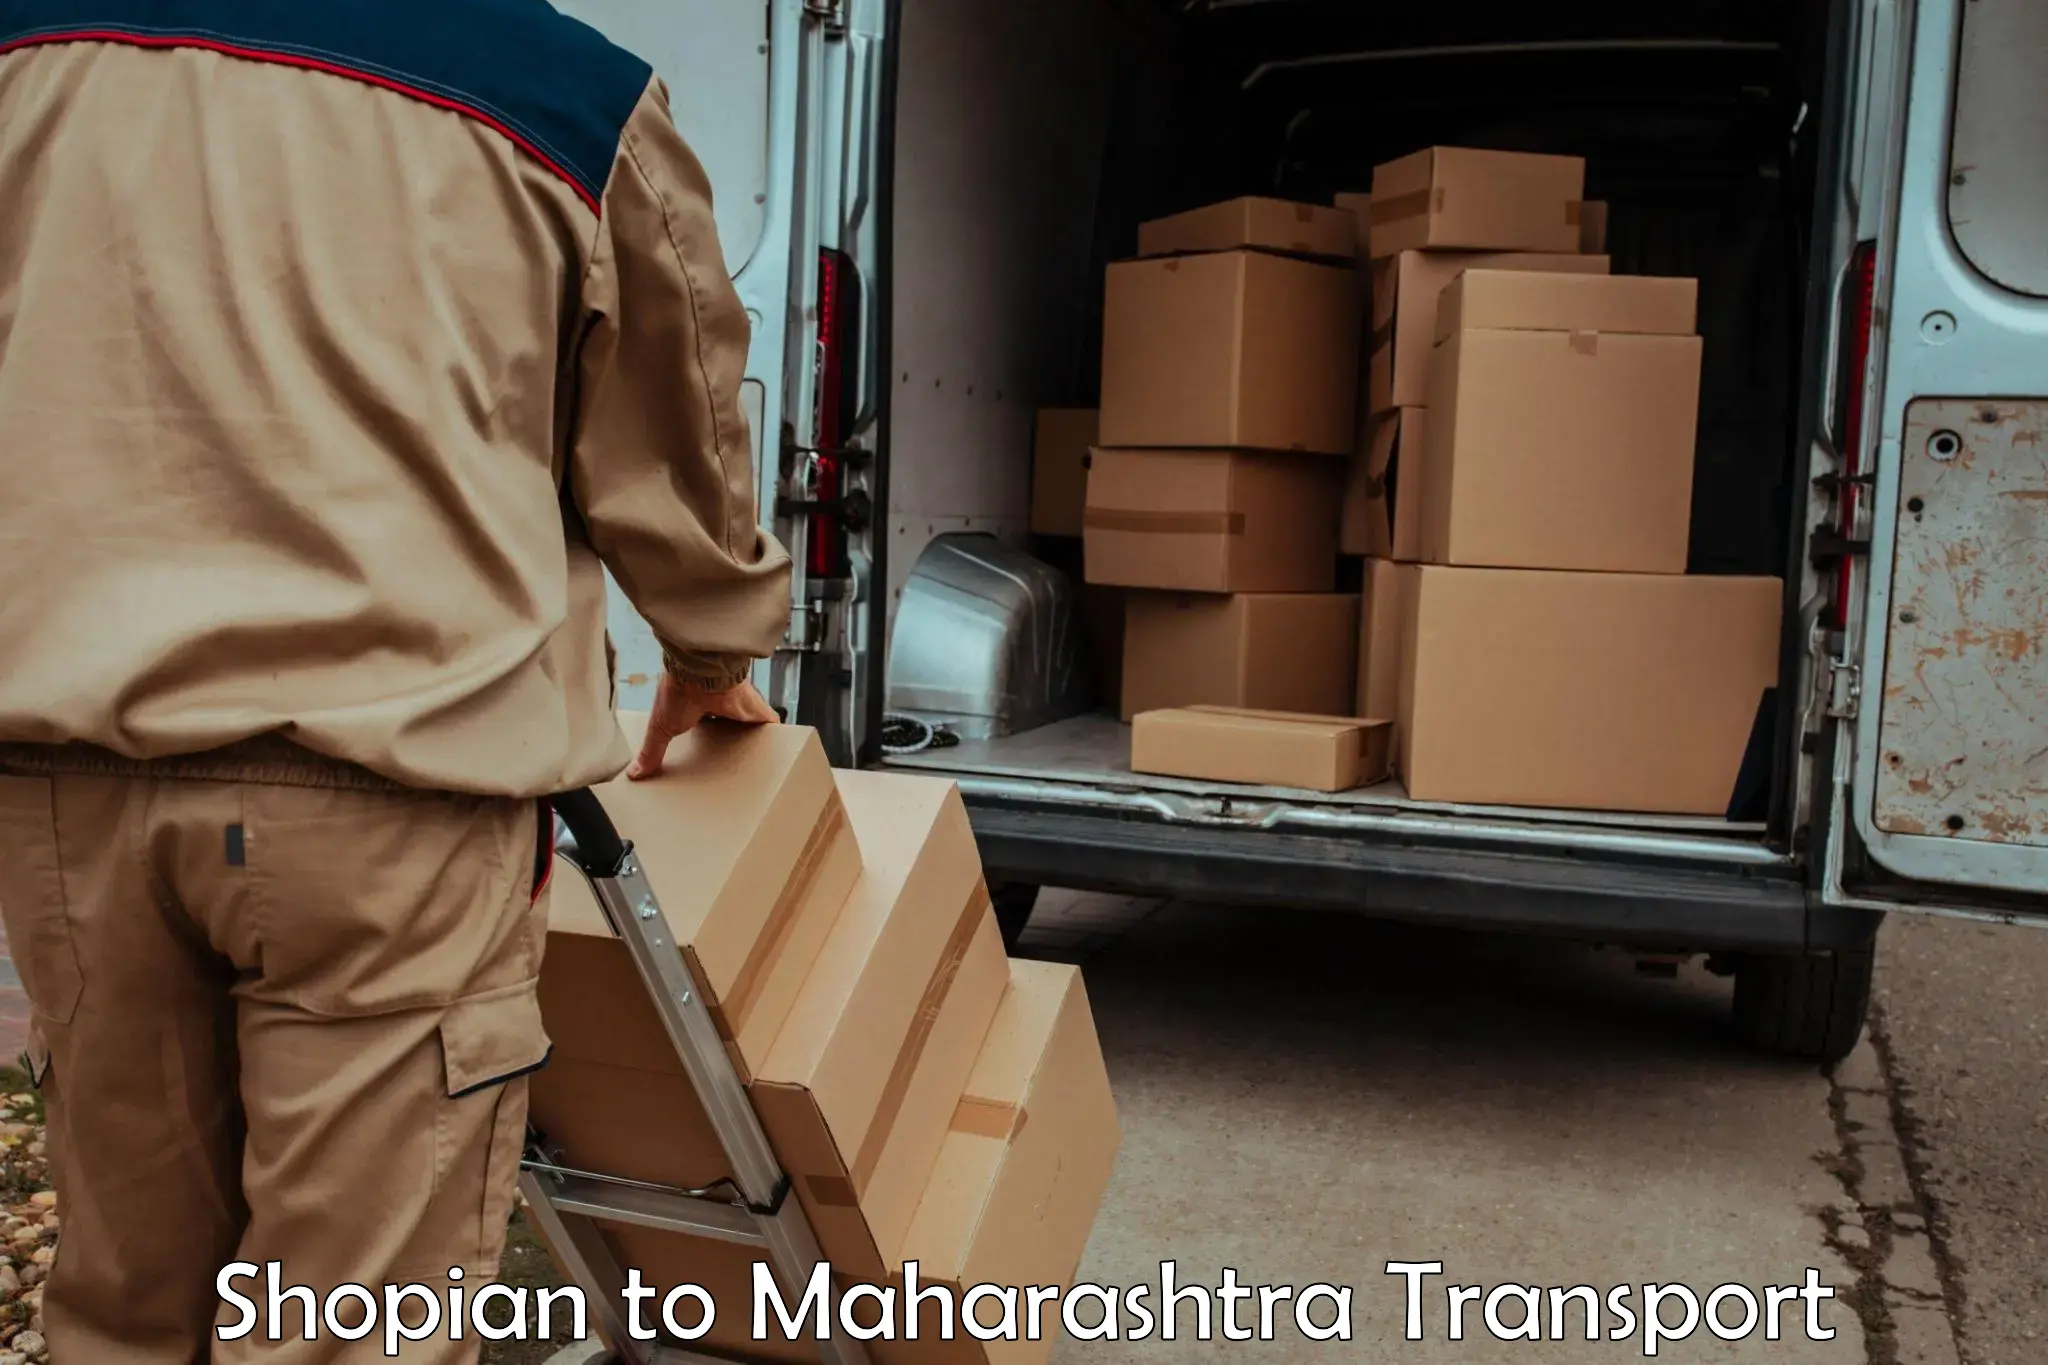 Commercial transport service Shopian to Walchandnagar